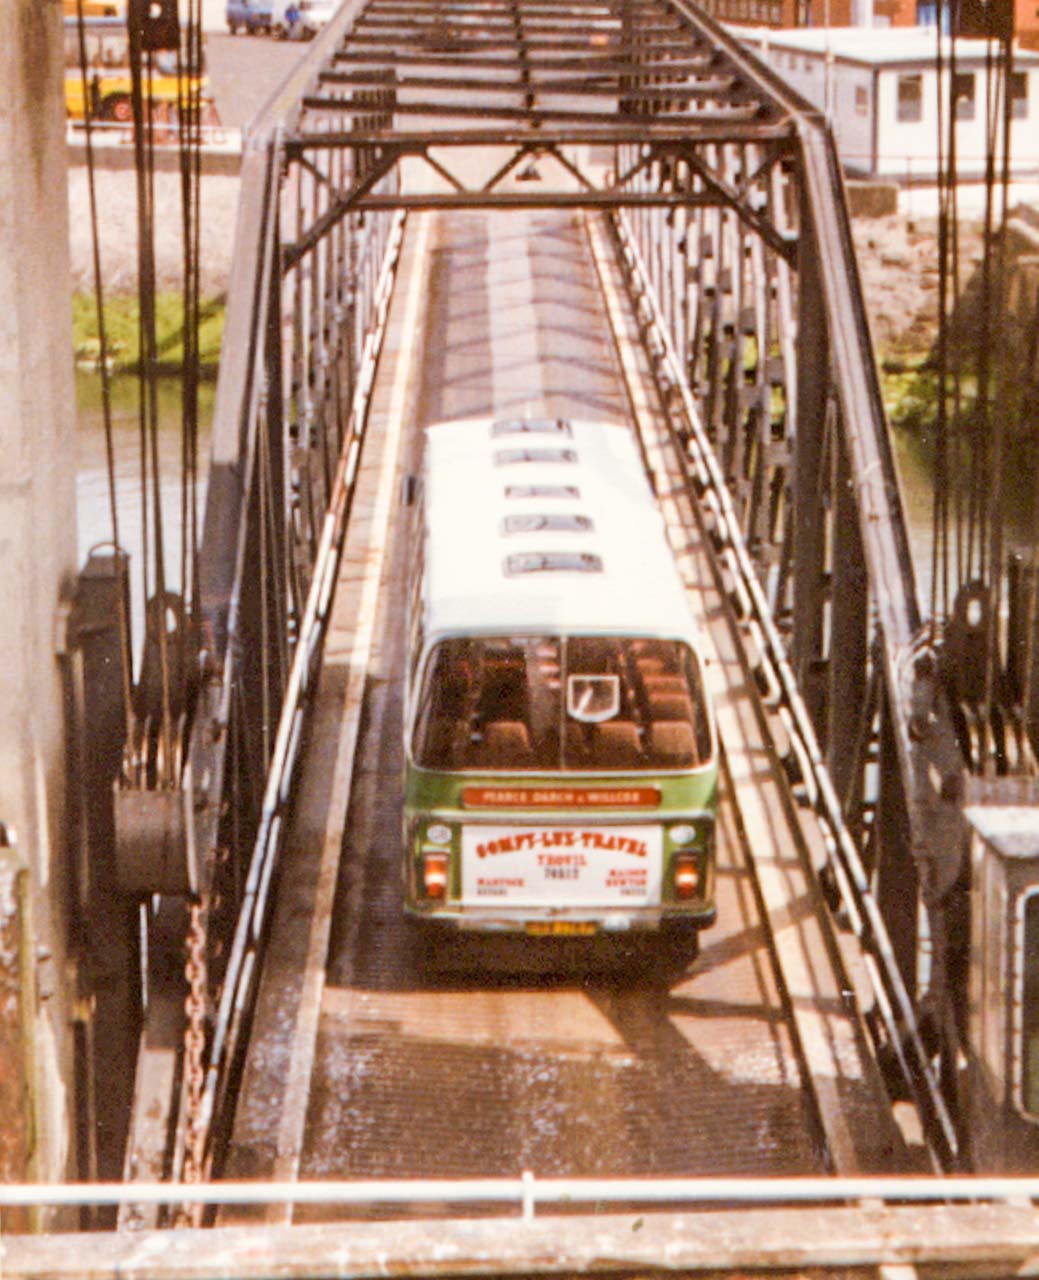 Reversing onto the Isle of Man Ferry 1983